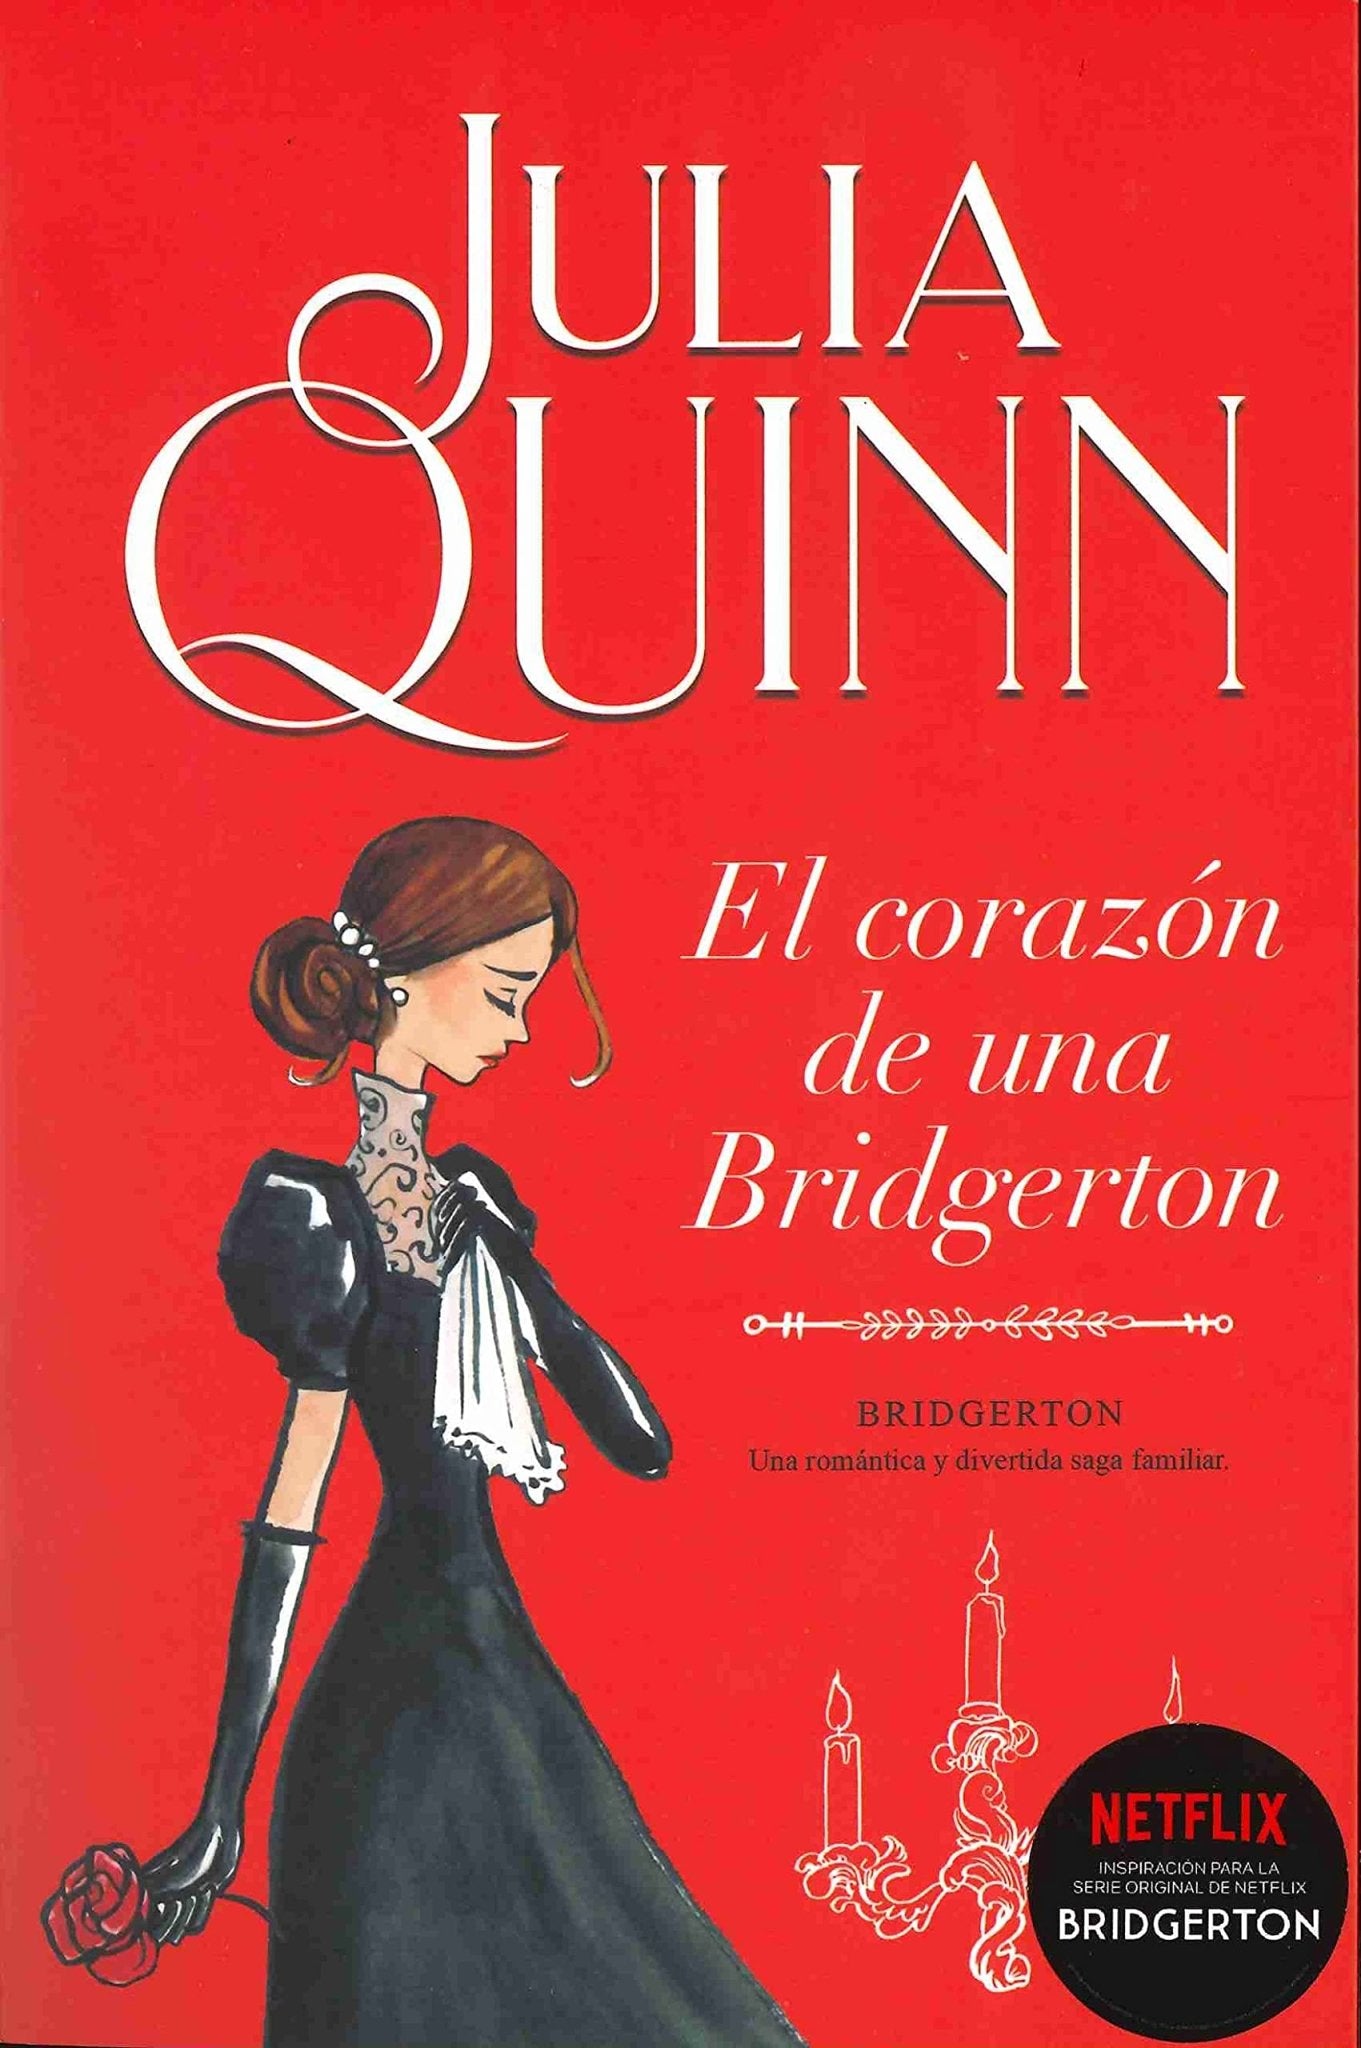 Bridgerton 6 - El Corazon de Una Bridgerton (Spanish Edition) by Julia Quinn [Paperback] - LV'S Global Media